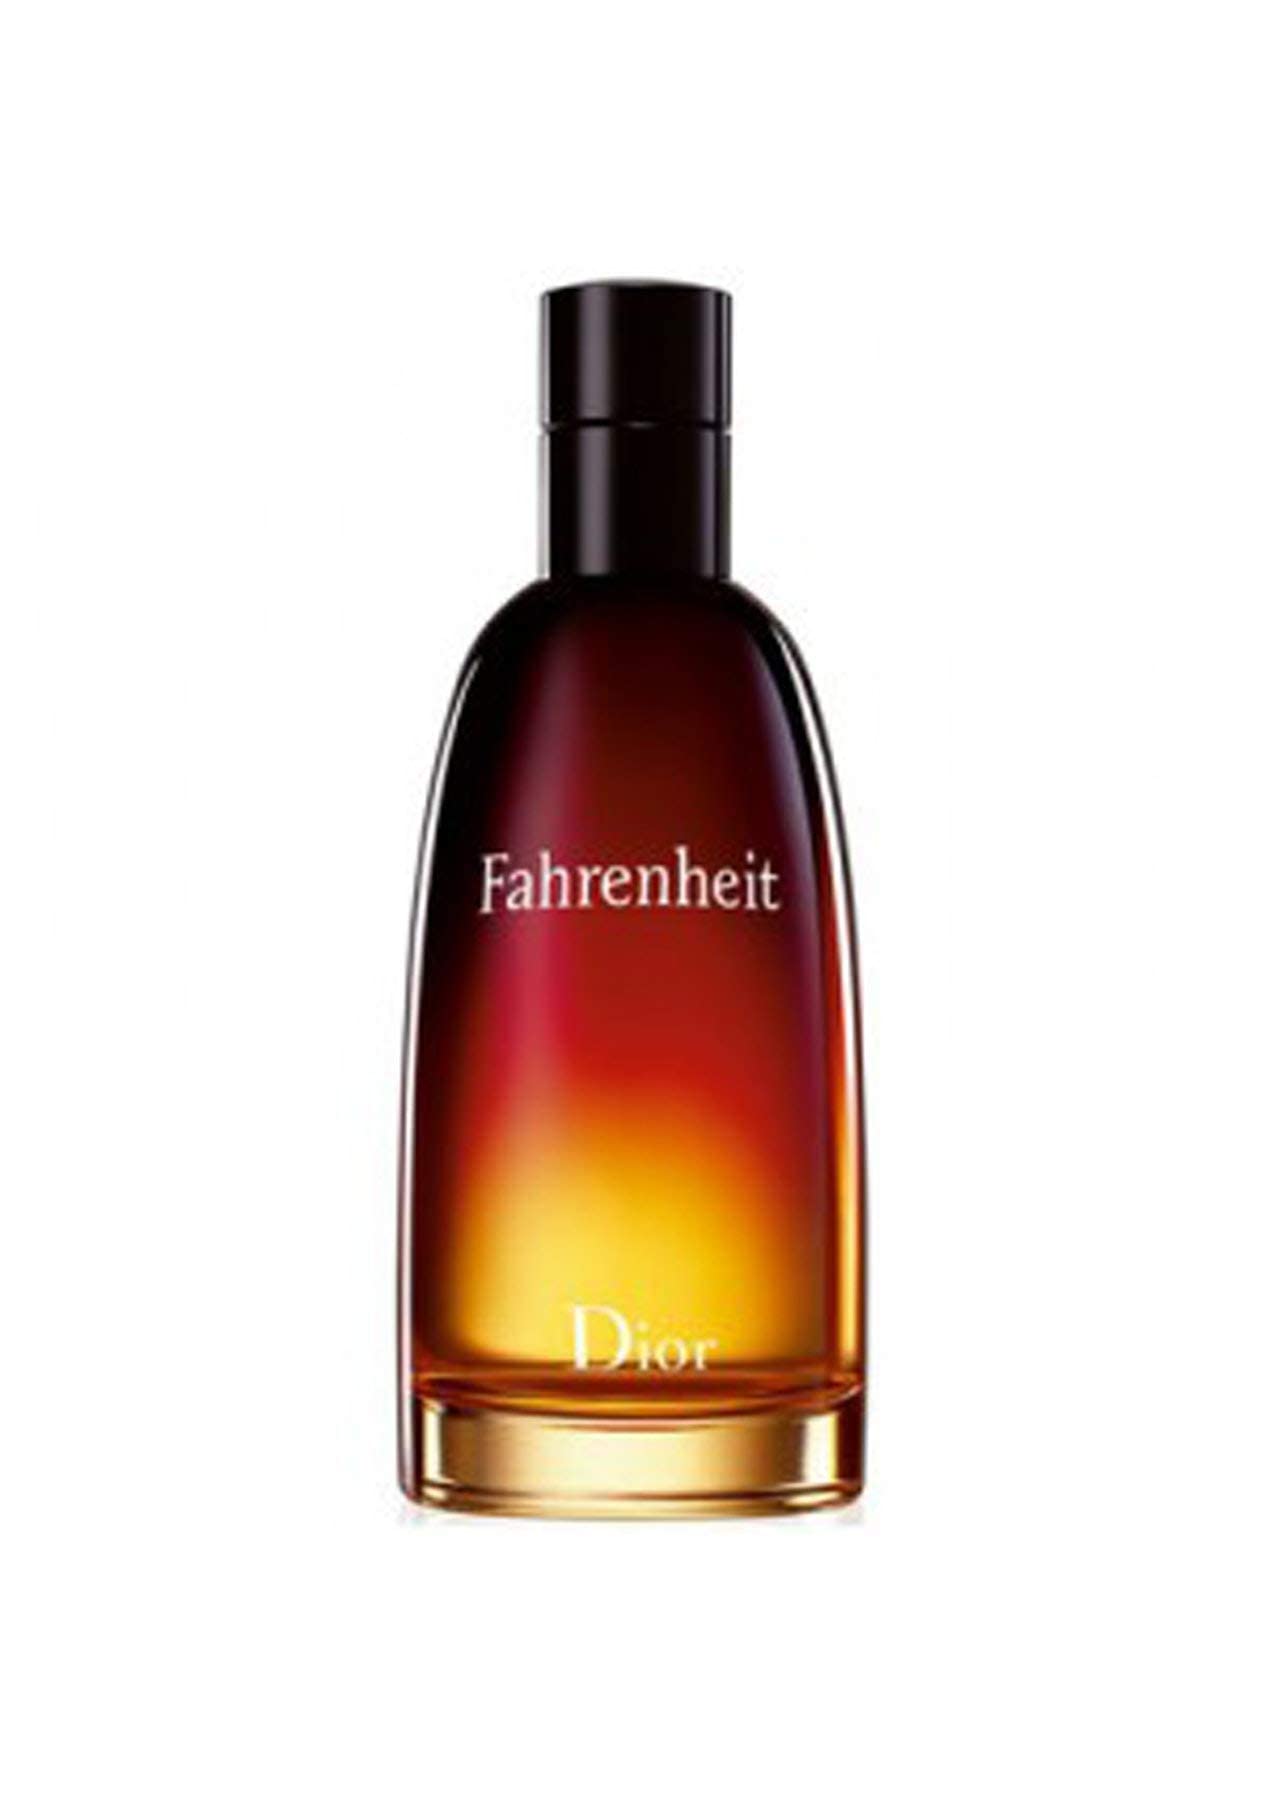 Christian Dior Fahrenheit EDT for men 100ml  PhilRegalo Ent   PhilRegalocom since 2005